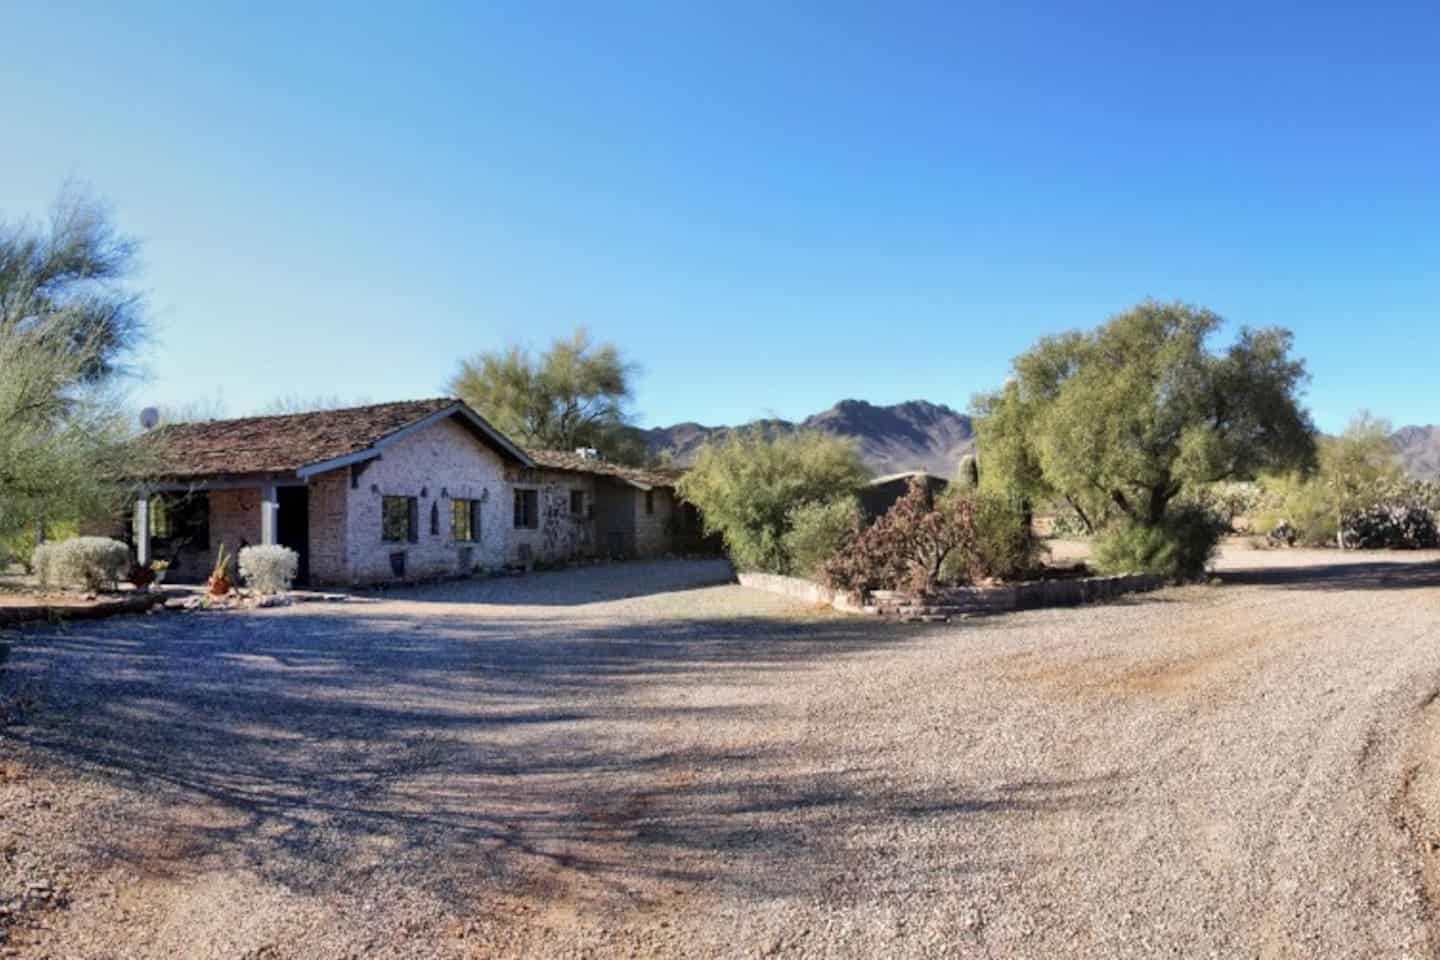 Image of Airbnb rental in Tucson, Arizona